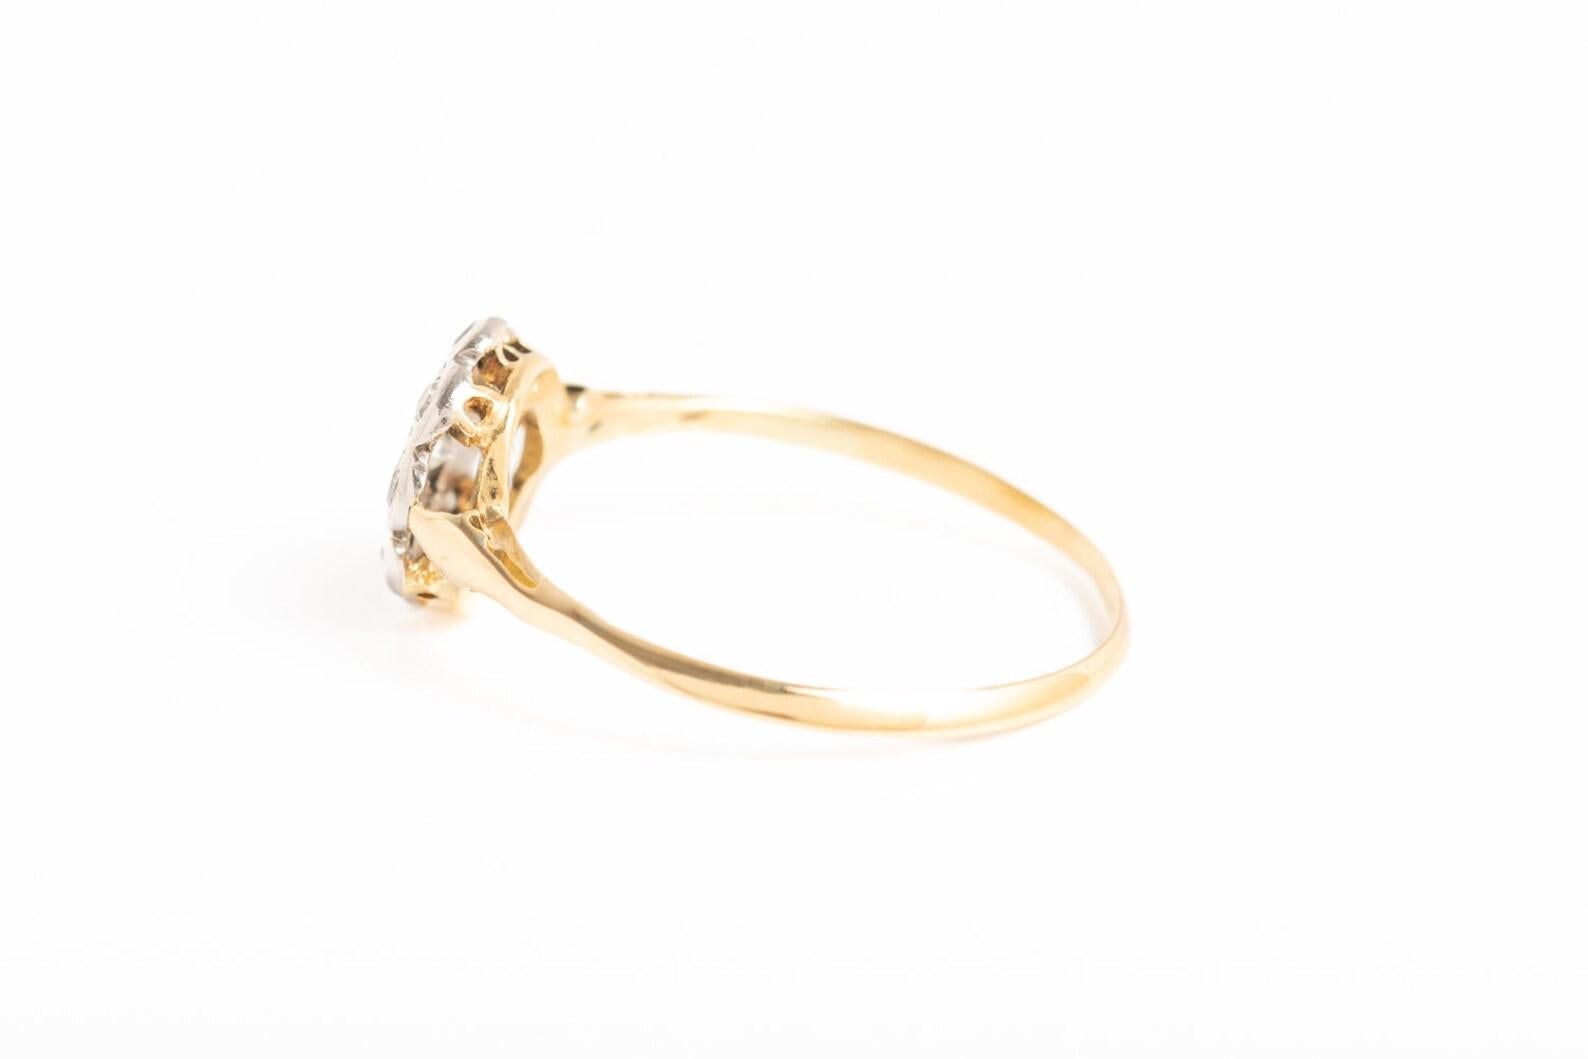 Antique Art Deco 18ct Gold Diamond Daisy Ring For Sale 2